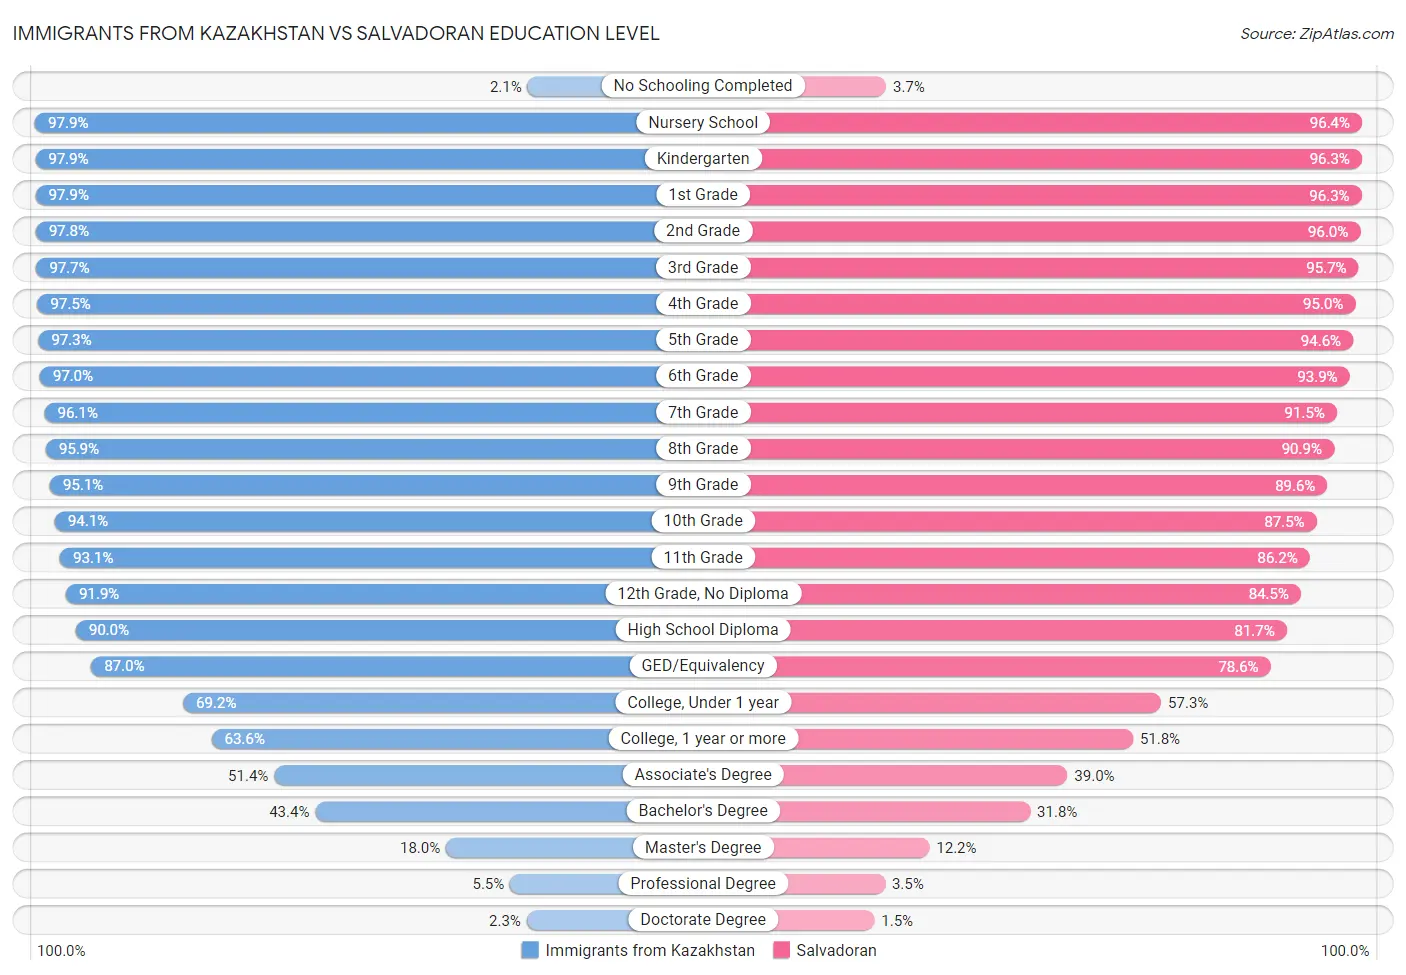 Immigrants from Kazakhstan vs Salvadoran Education Level